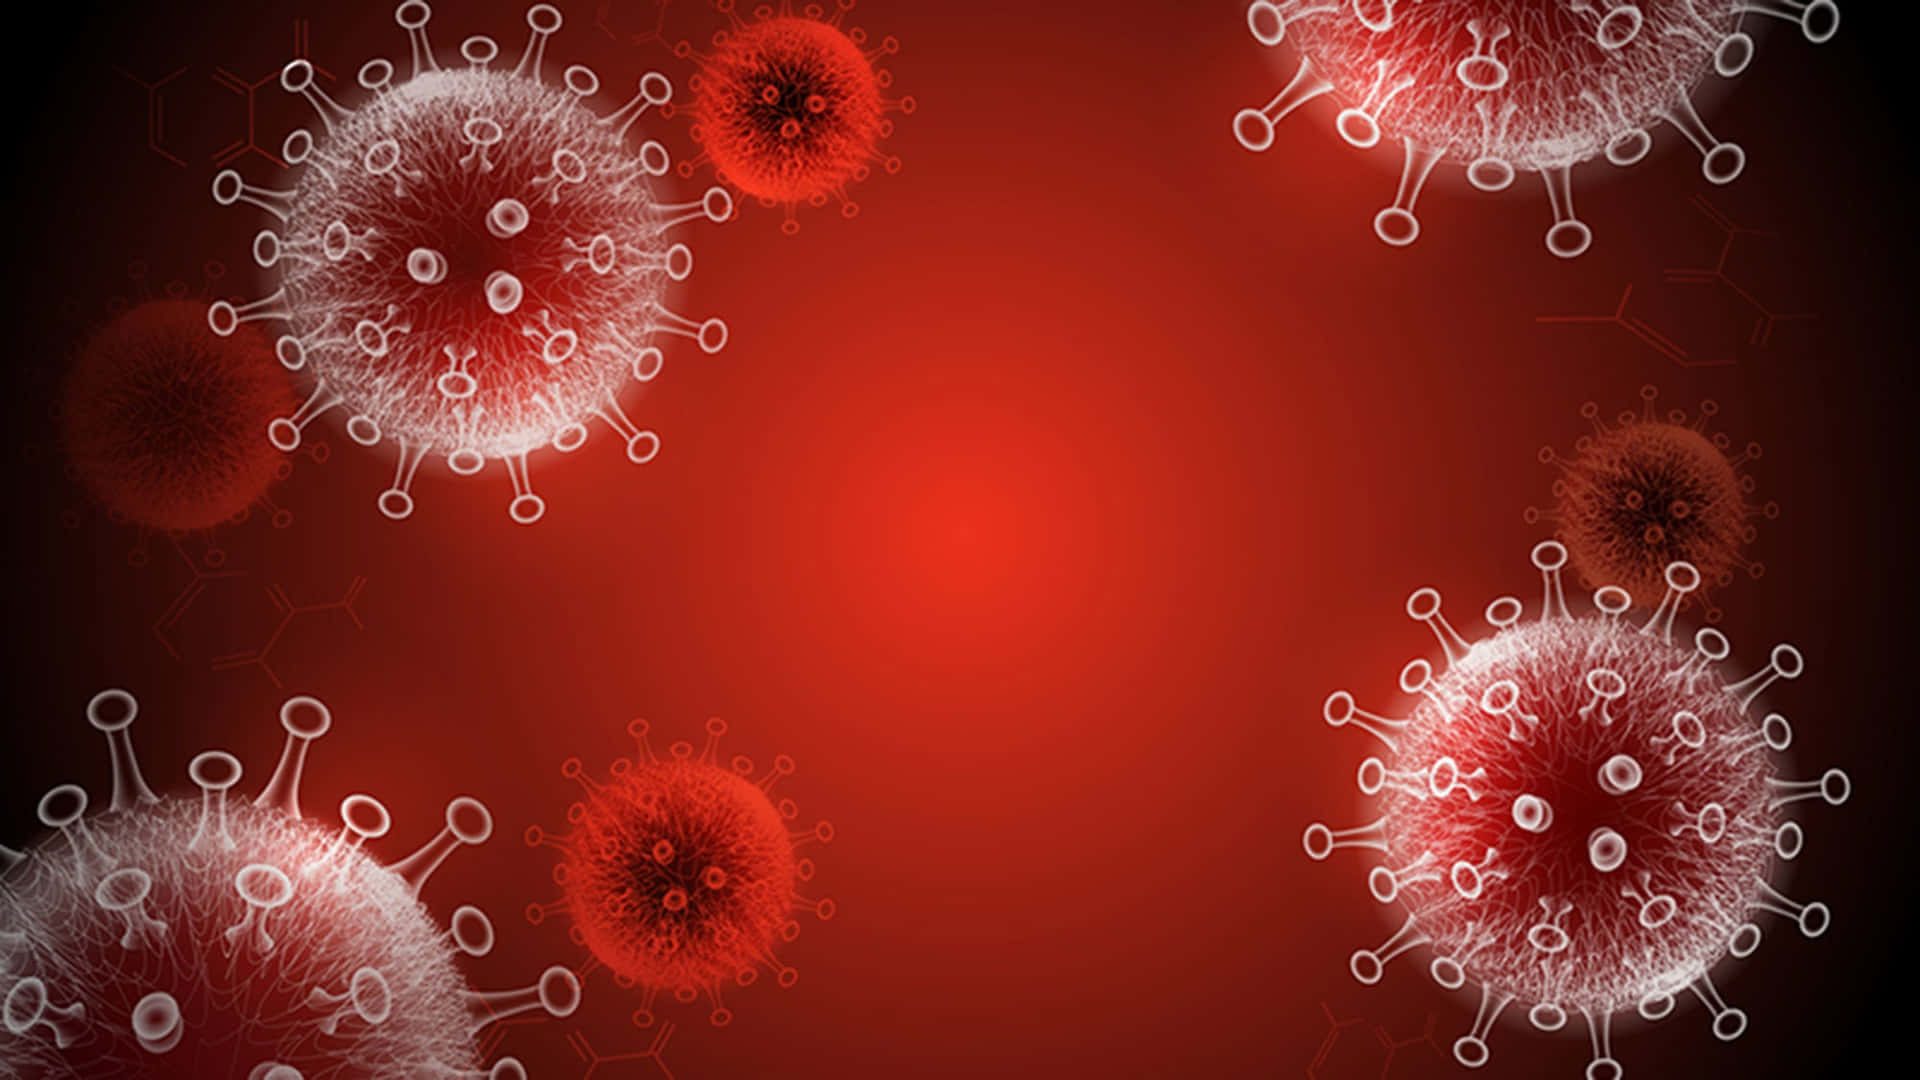 Coronaviruses On A Red Background